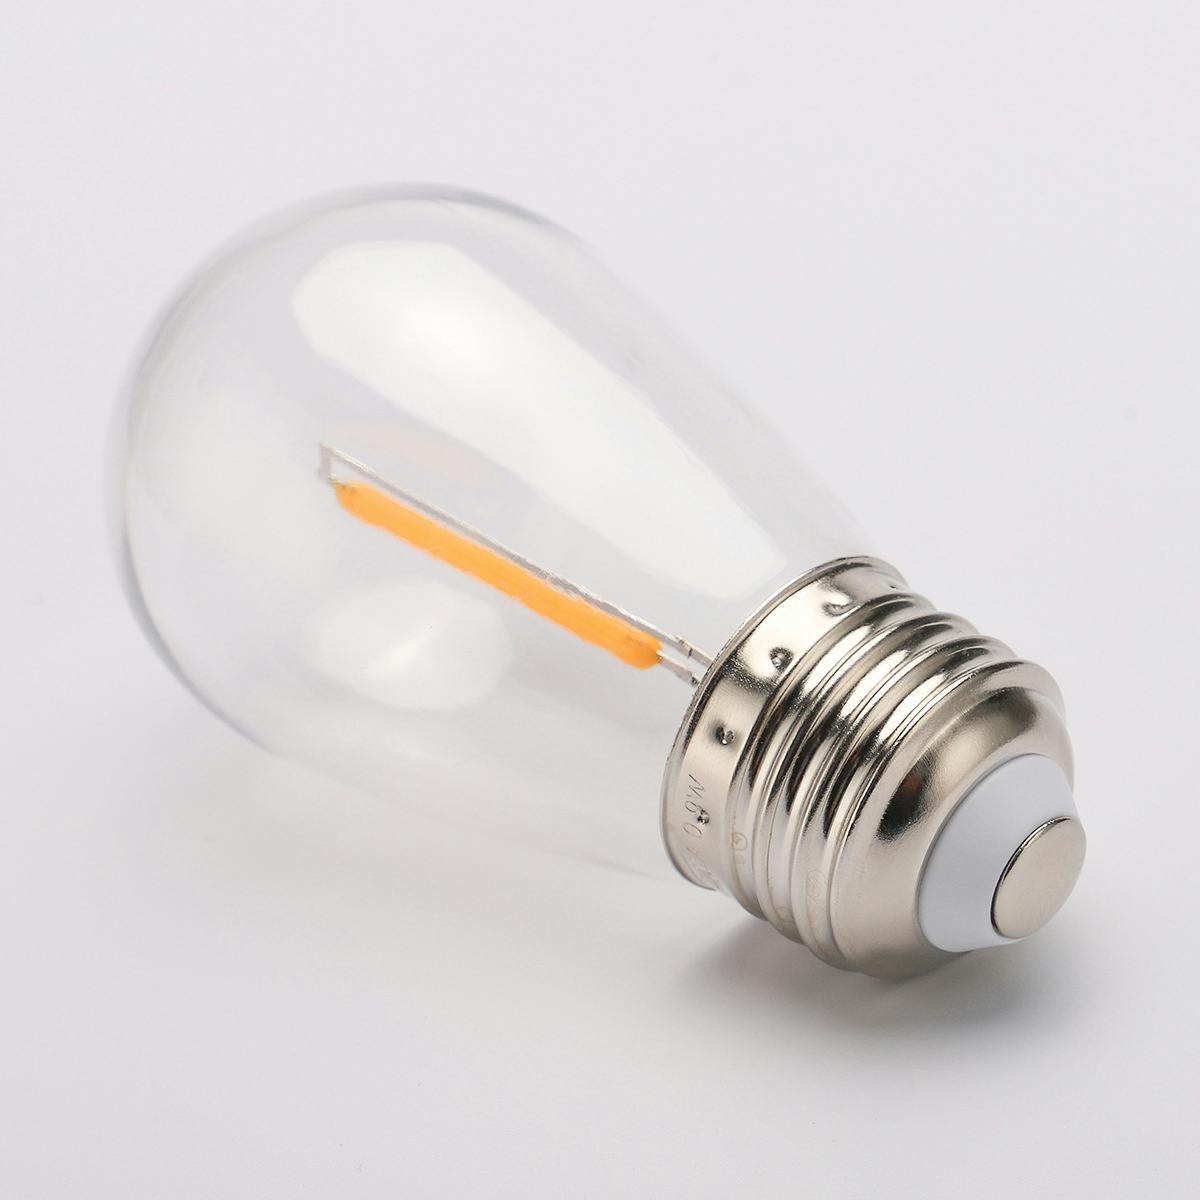 Lampadina LED E27 Dimmerabile 1W - 2700K Bianco Caldo - classe energetica A+